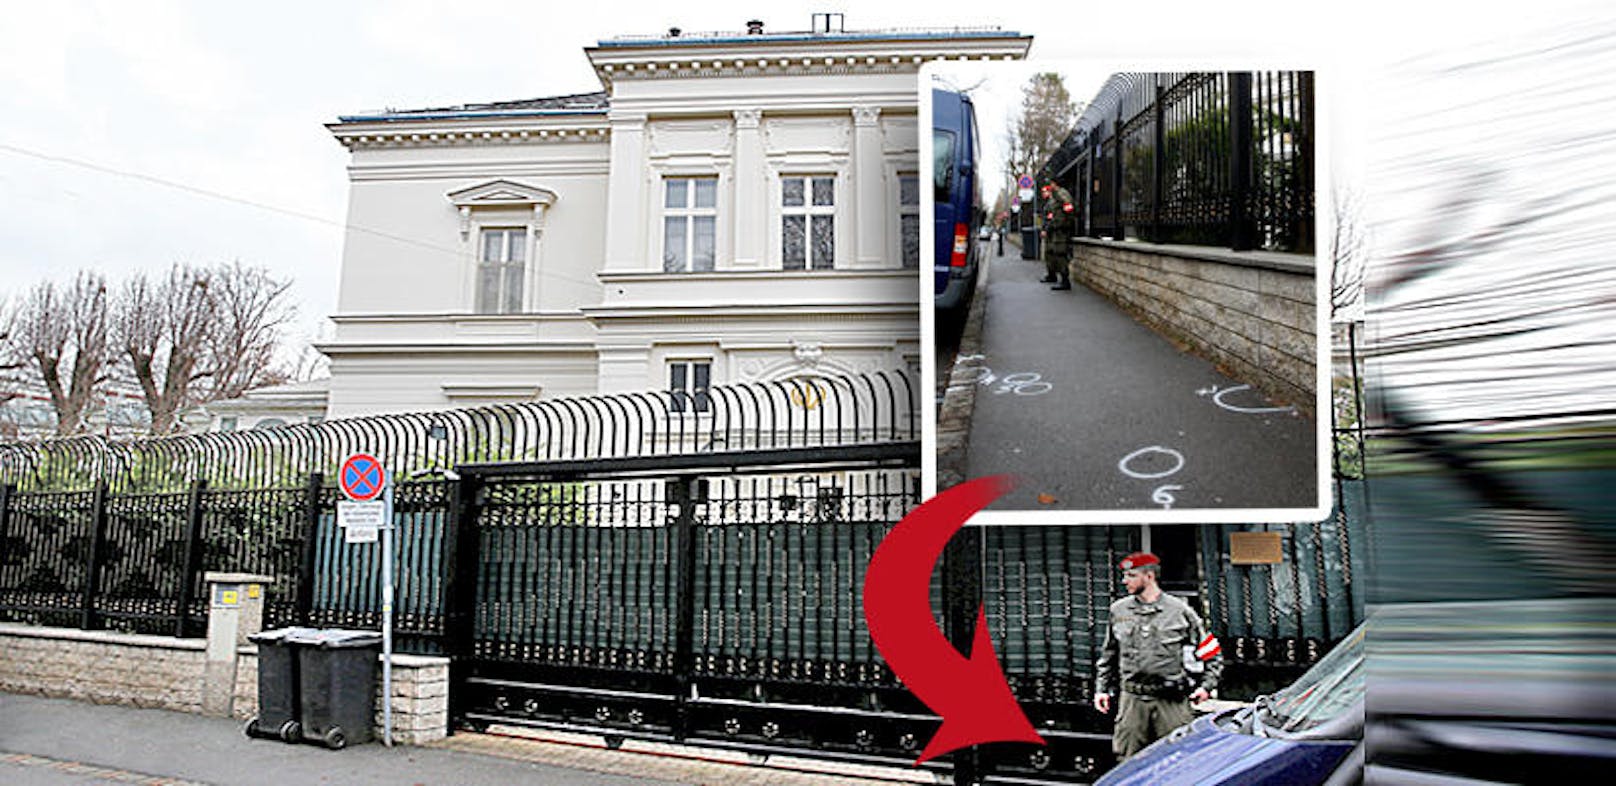 Bluttat vor iranischer Botschafts-Residenz in Wien: Soldat erschoss Angreifer